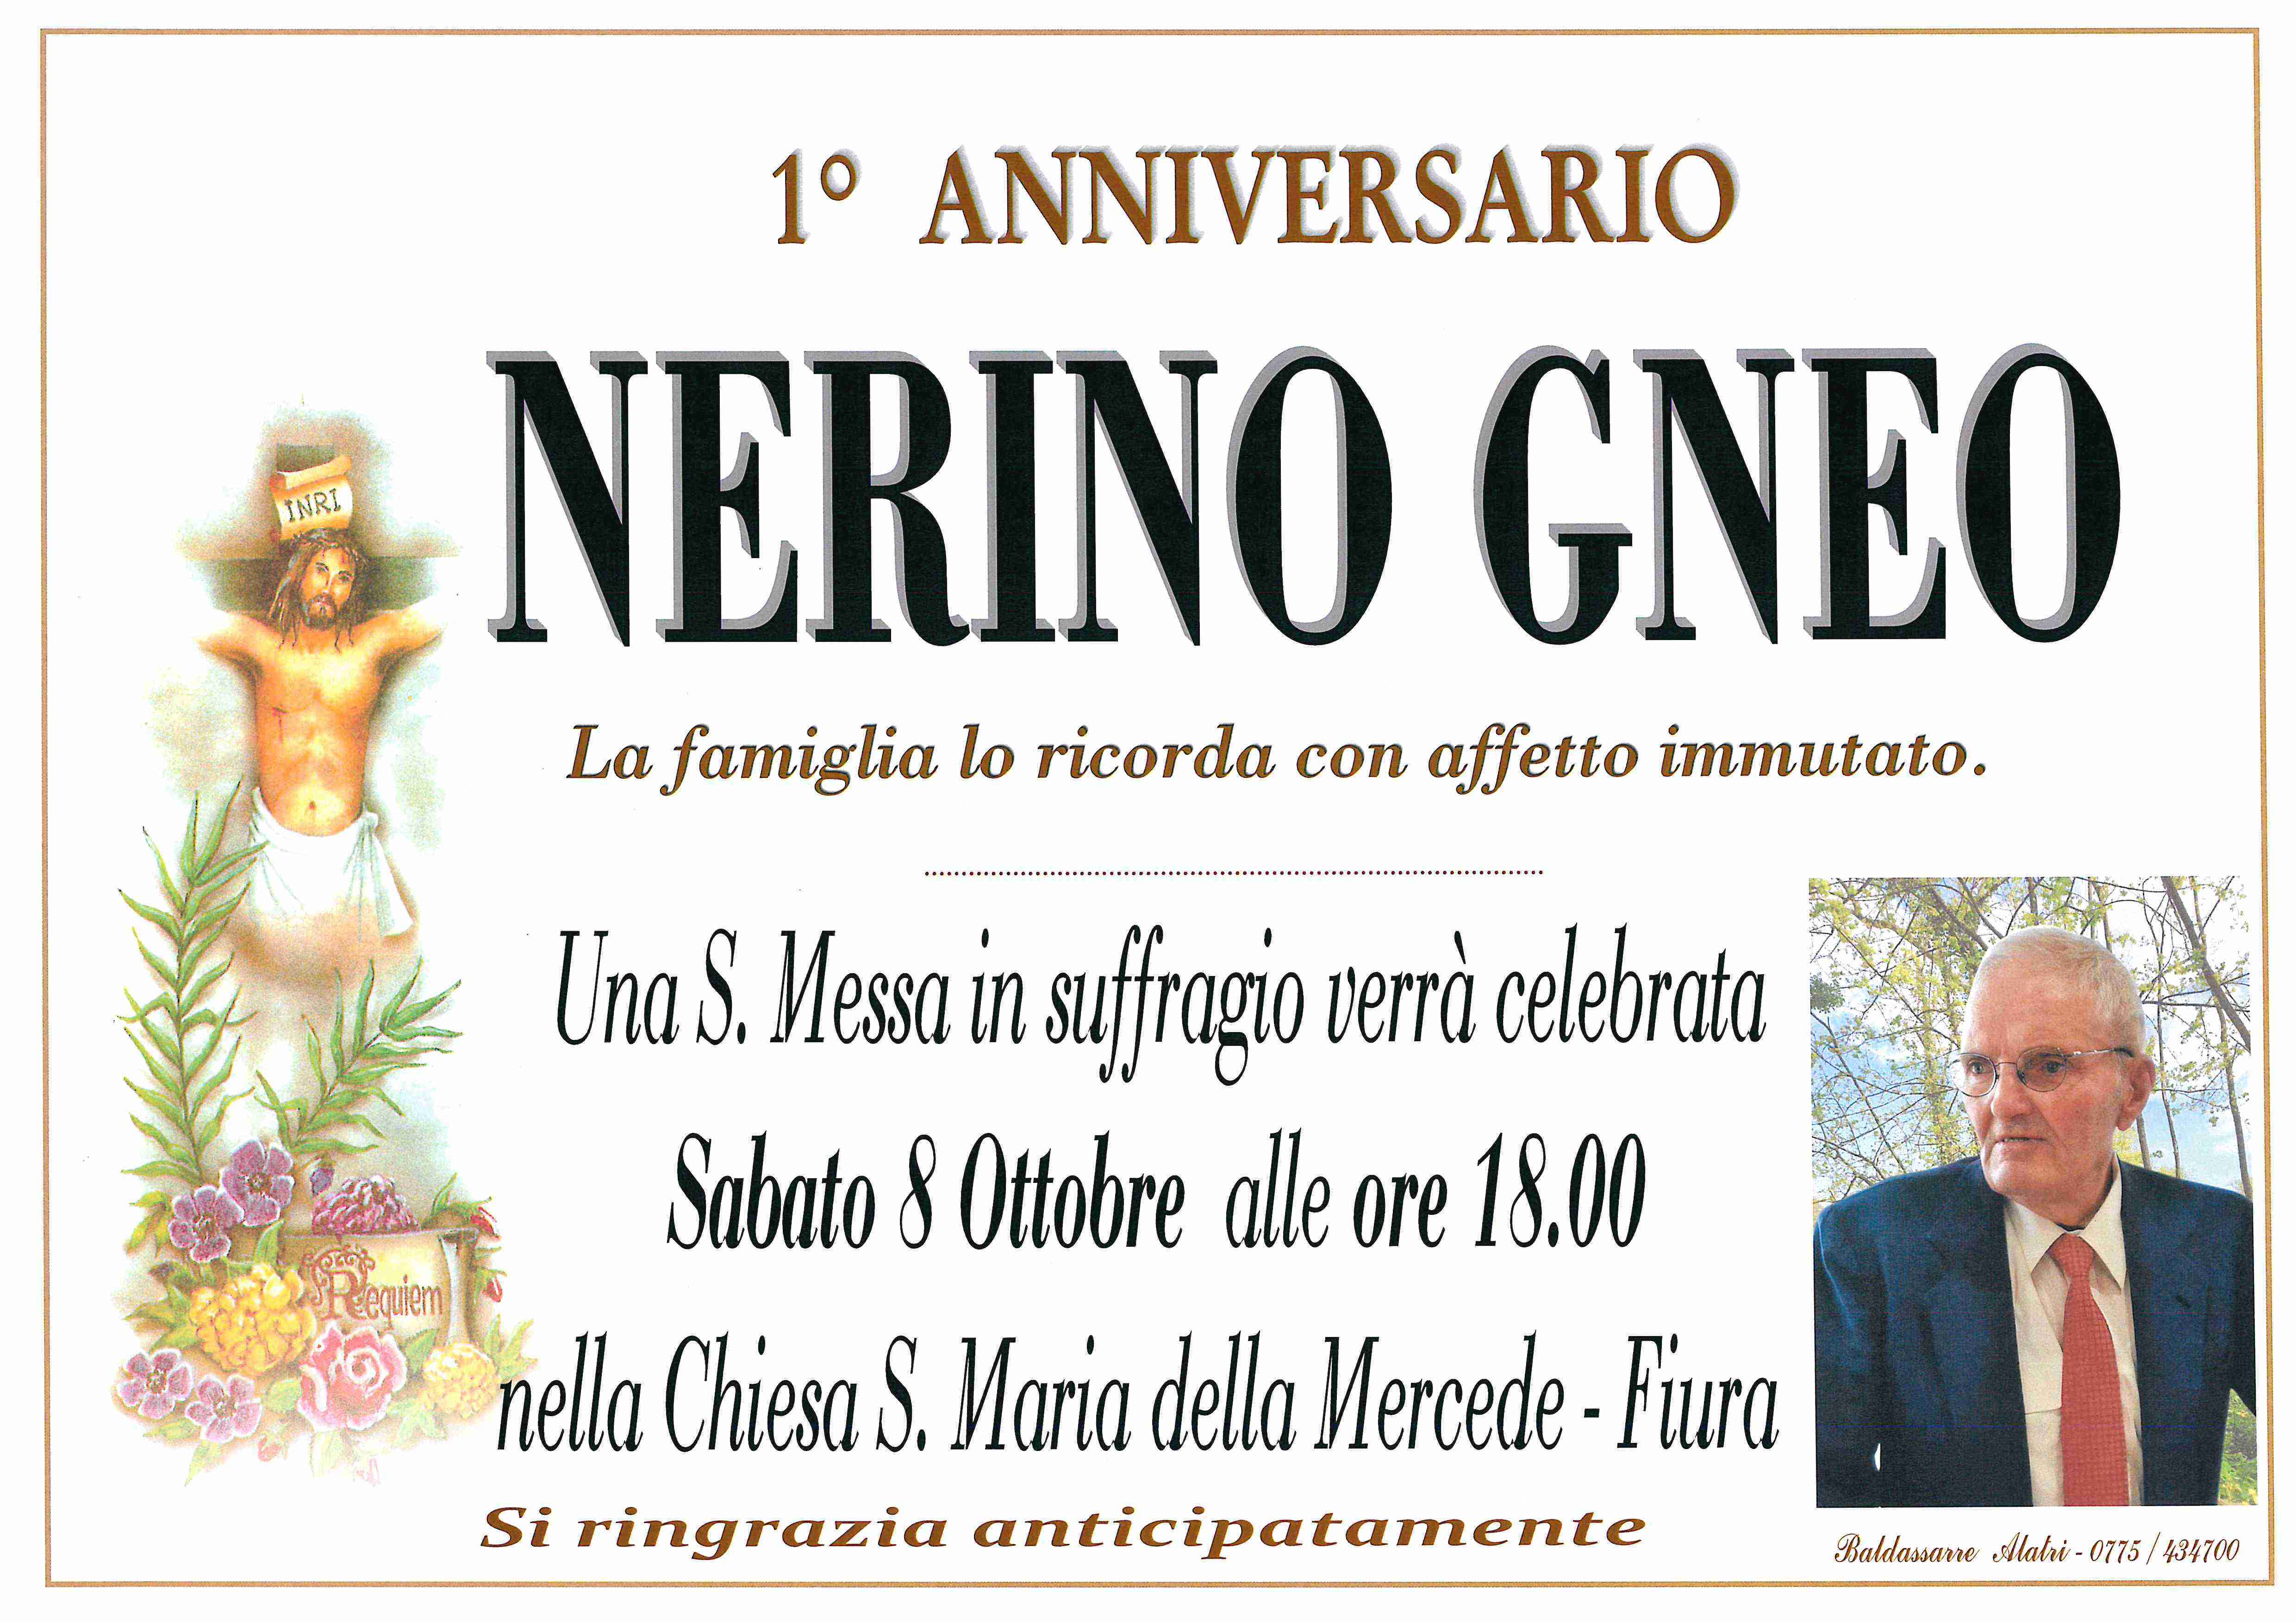 Nerino Gneo